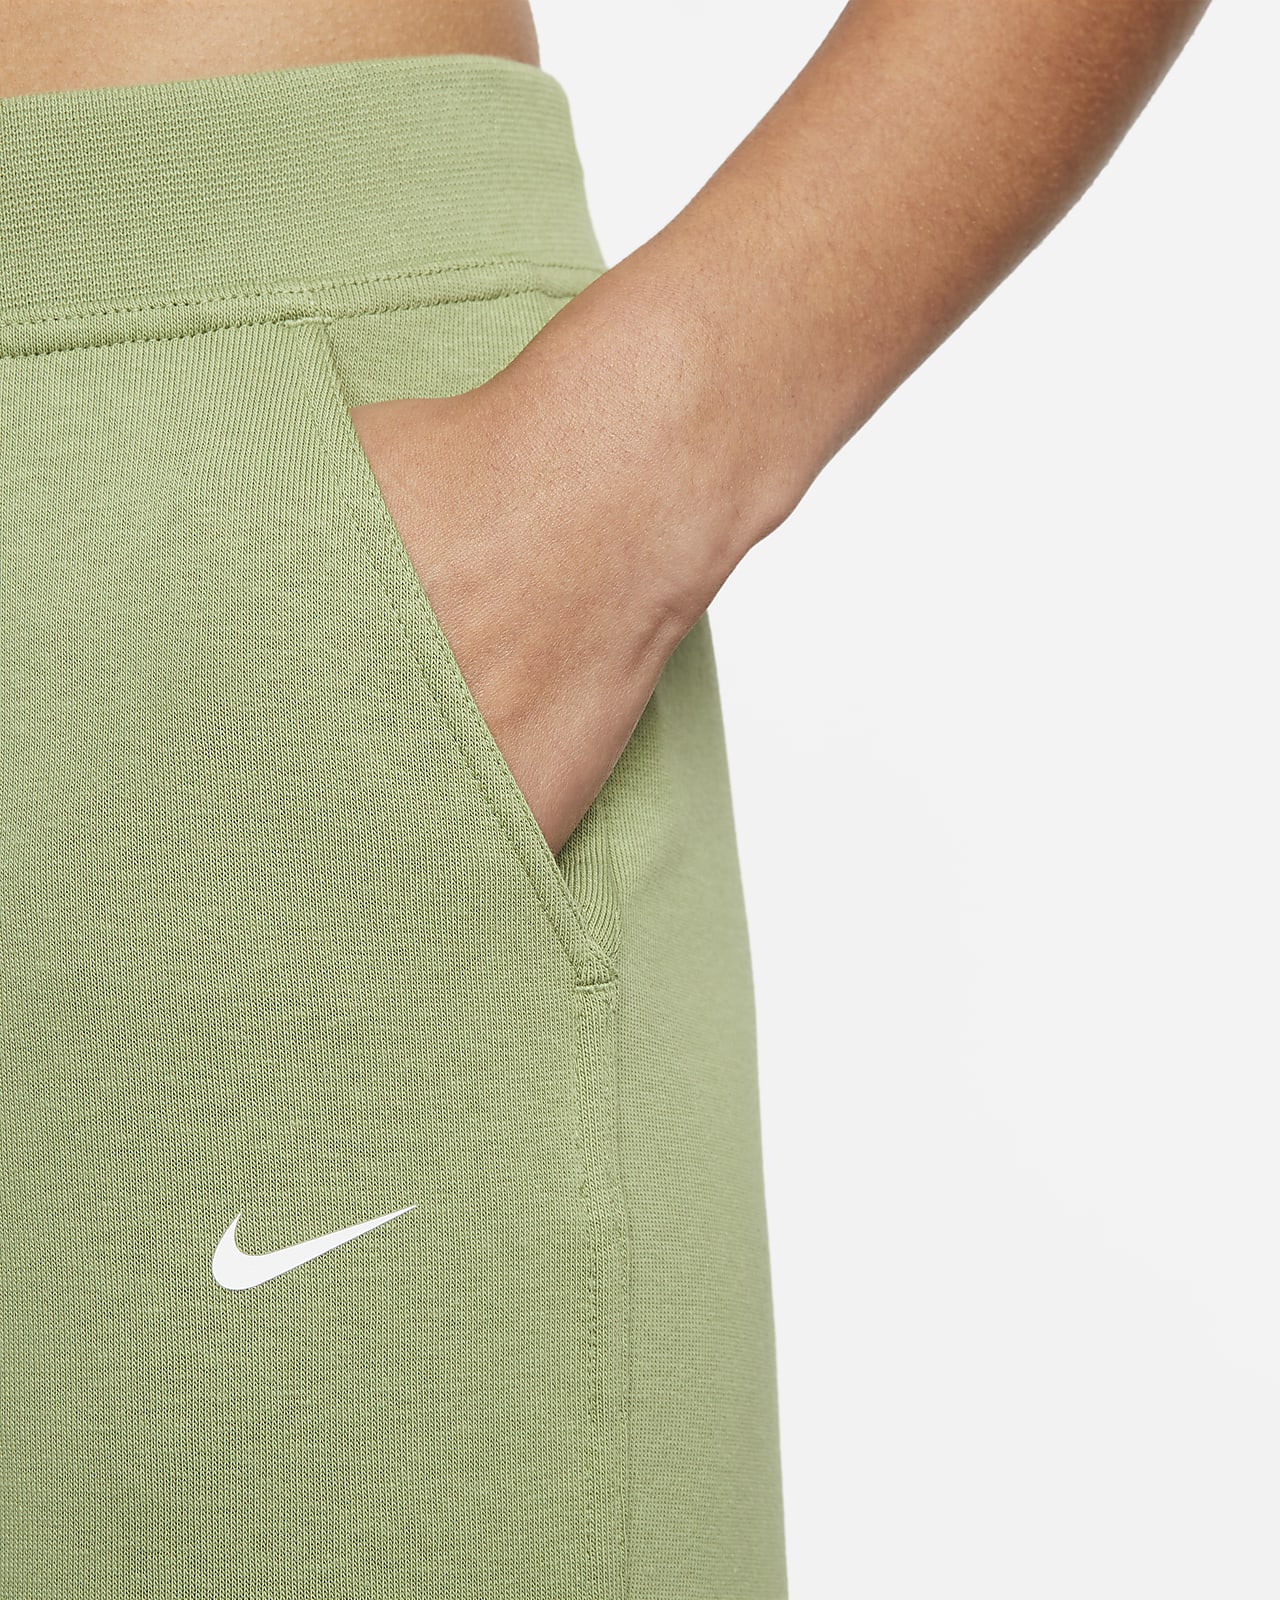 Nike Dri Fit Track Pants Womens Medium Navy Blue Elastic Waist Pull On Zip  ankle